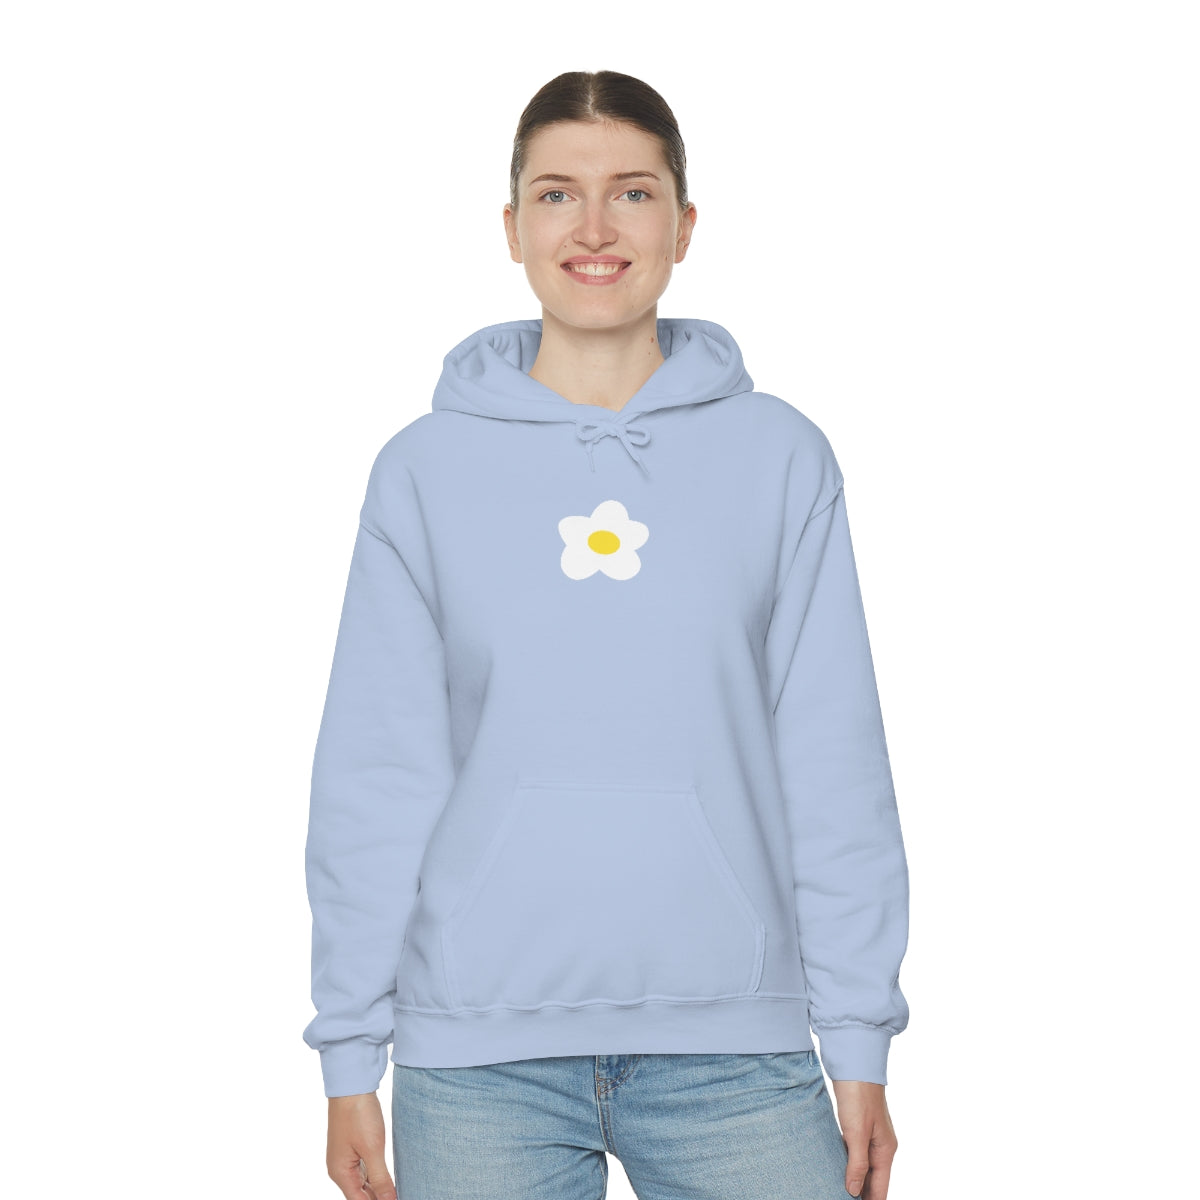 Soft Girly Flower Sweatshirt Hoodie